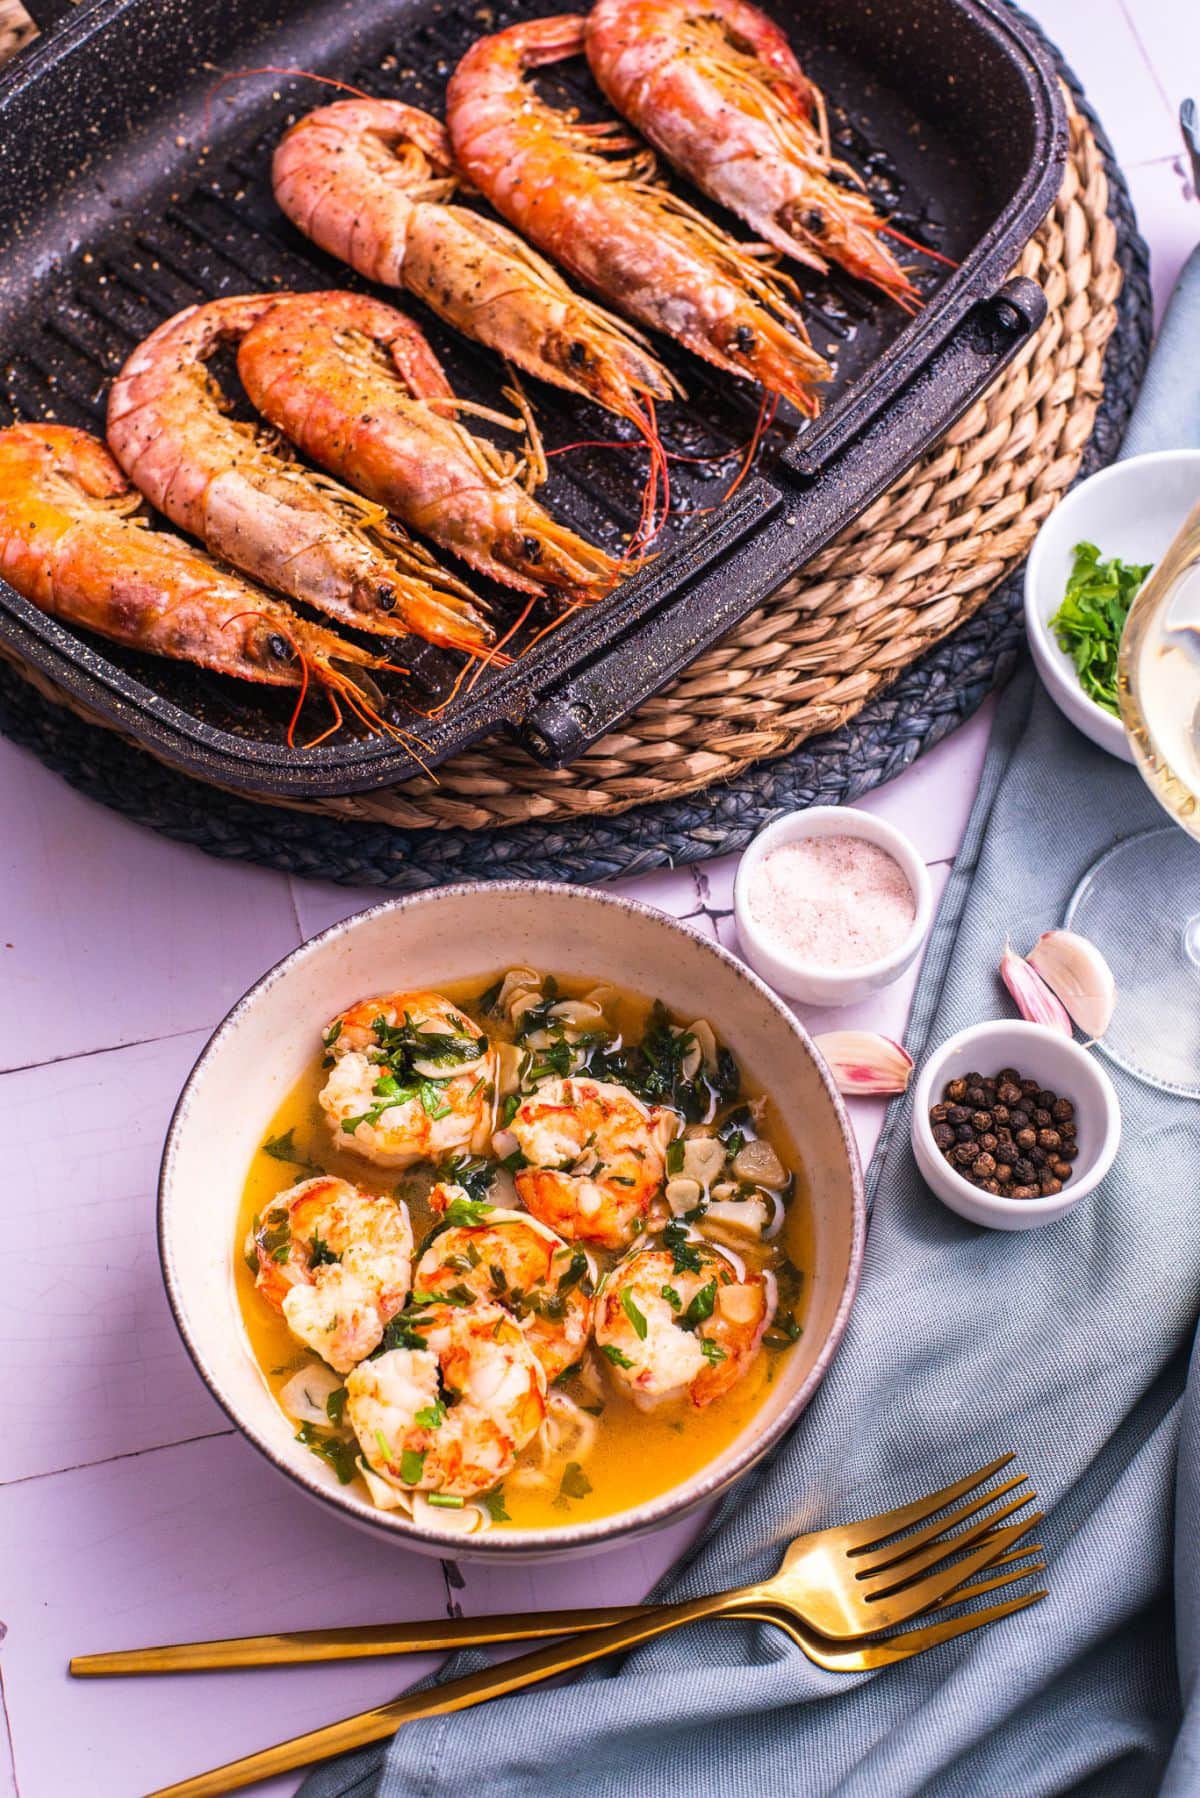 How to cook shrimp 6